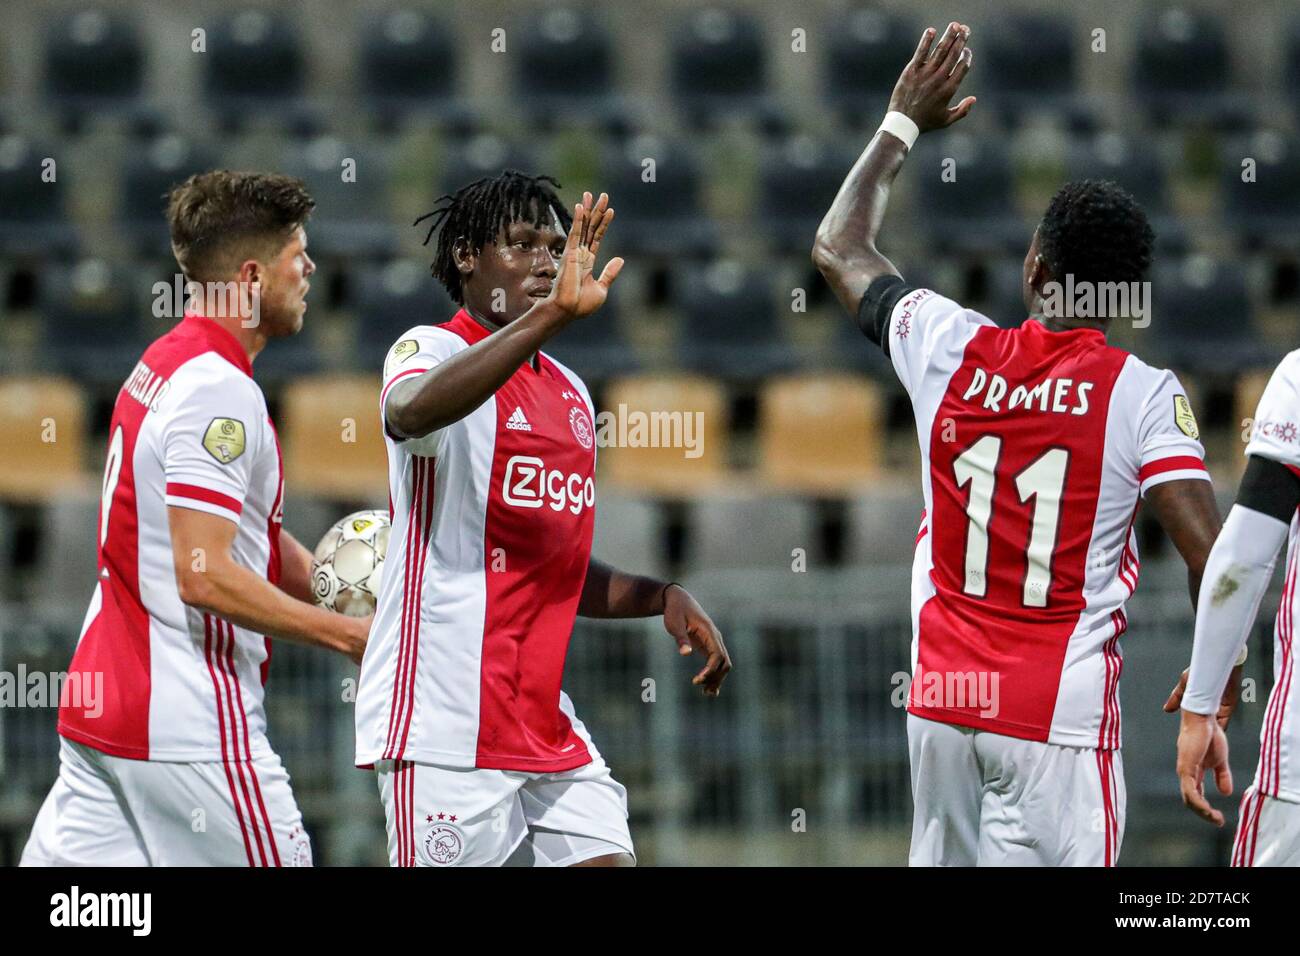 VENLO, NETHERLANDS - OCTOBER 24: Klaas-Jan Huntelaar of Ajax, celebrating  goal of Lassina Traore of Ajax, scoring this 5th goal in this match (0:13),  Quincy Promes of Ajax during the Dutch Eredivisie